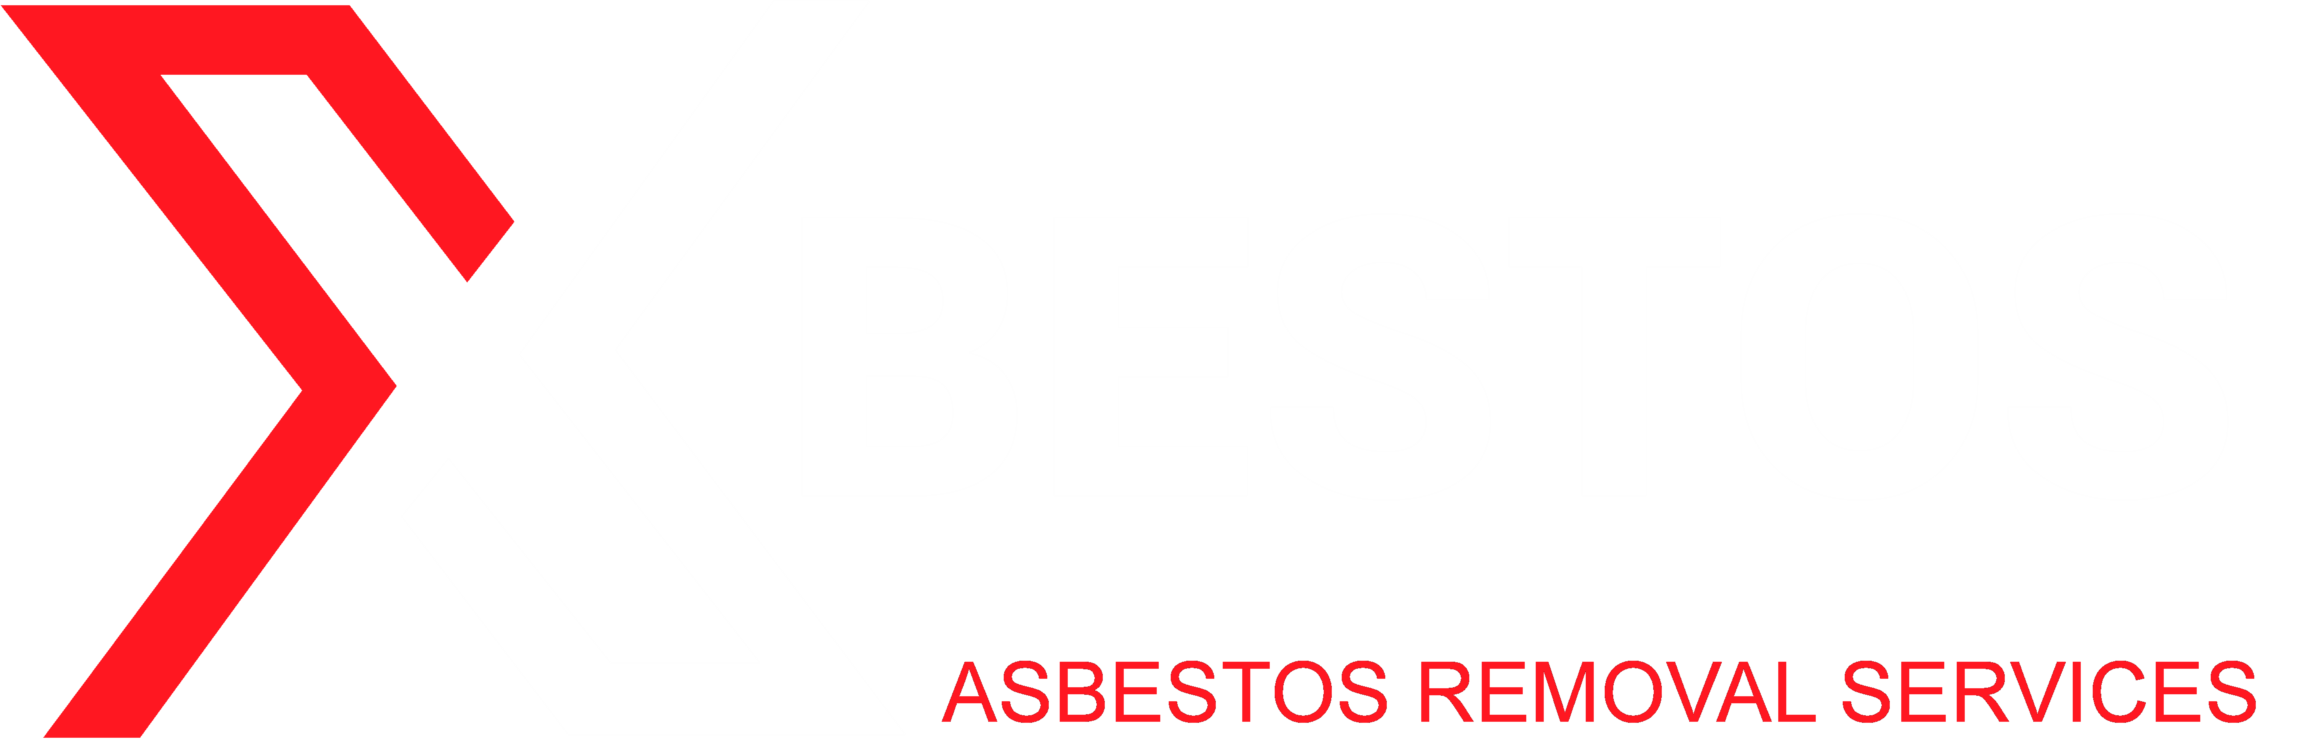 Xbestos Trademark